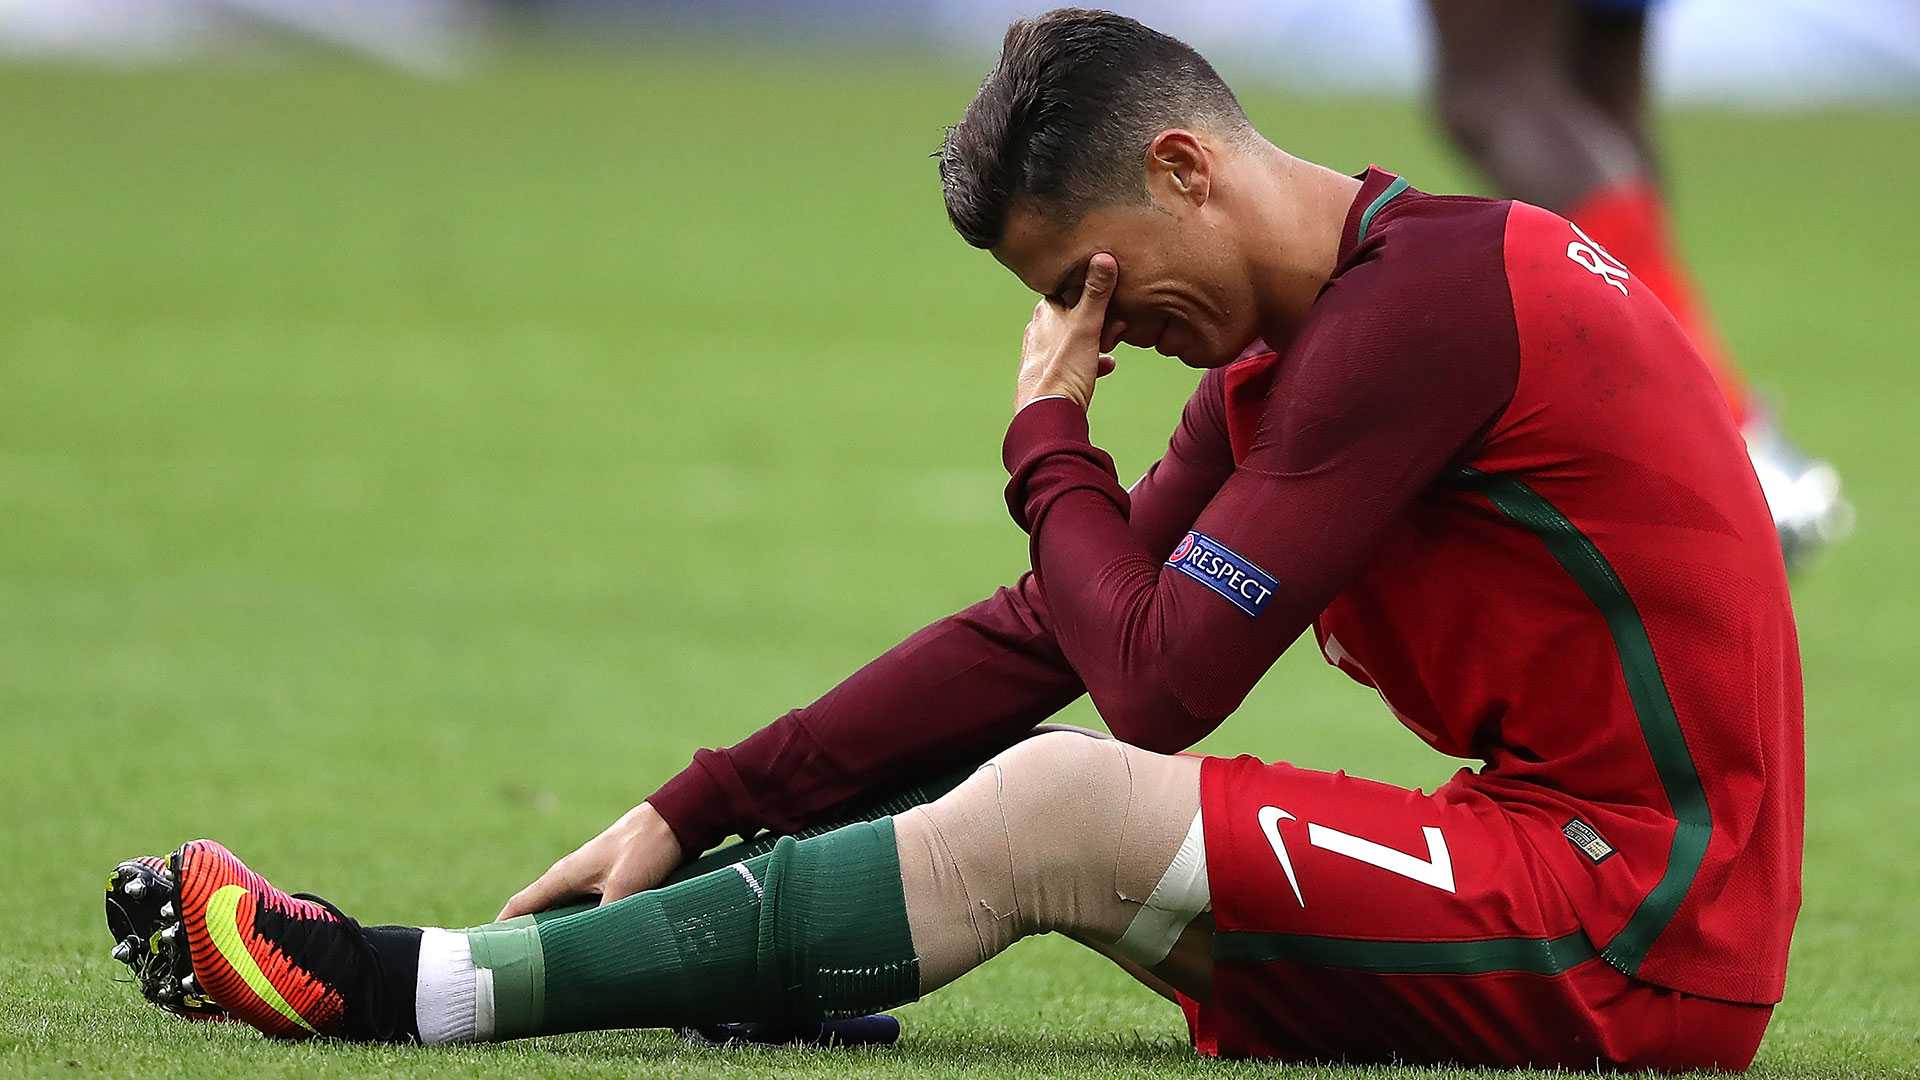 Ronaldo's emotional rollercoaster in Euro 16